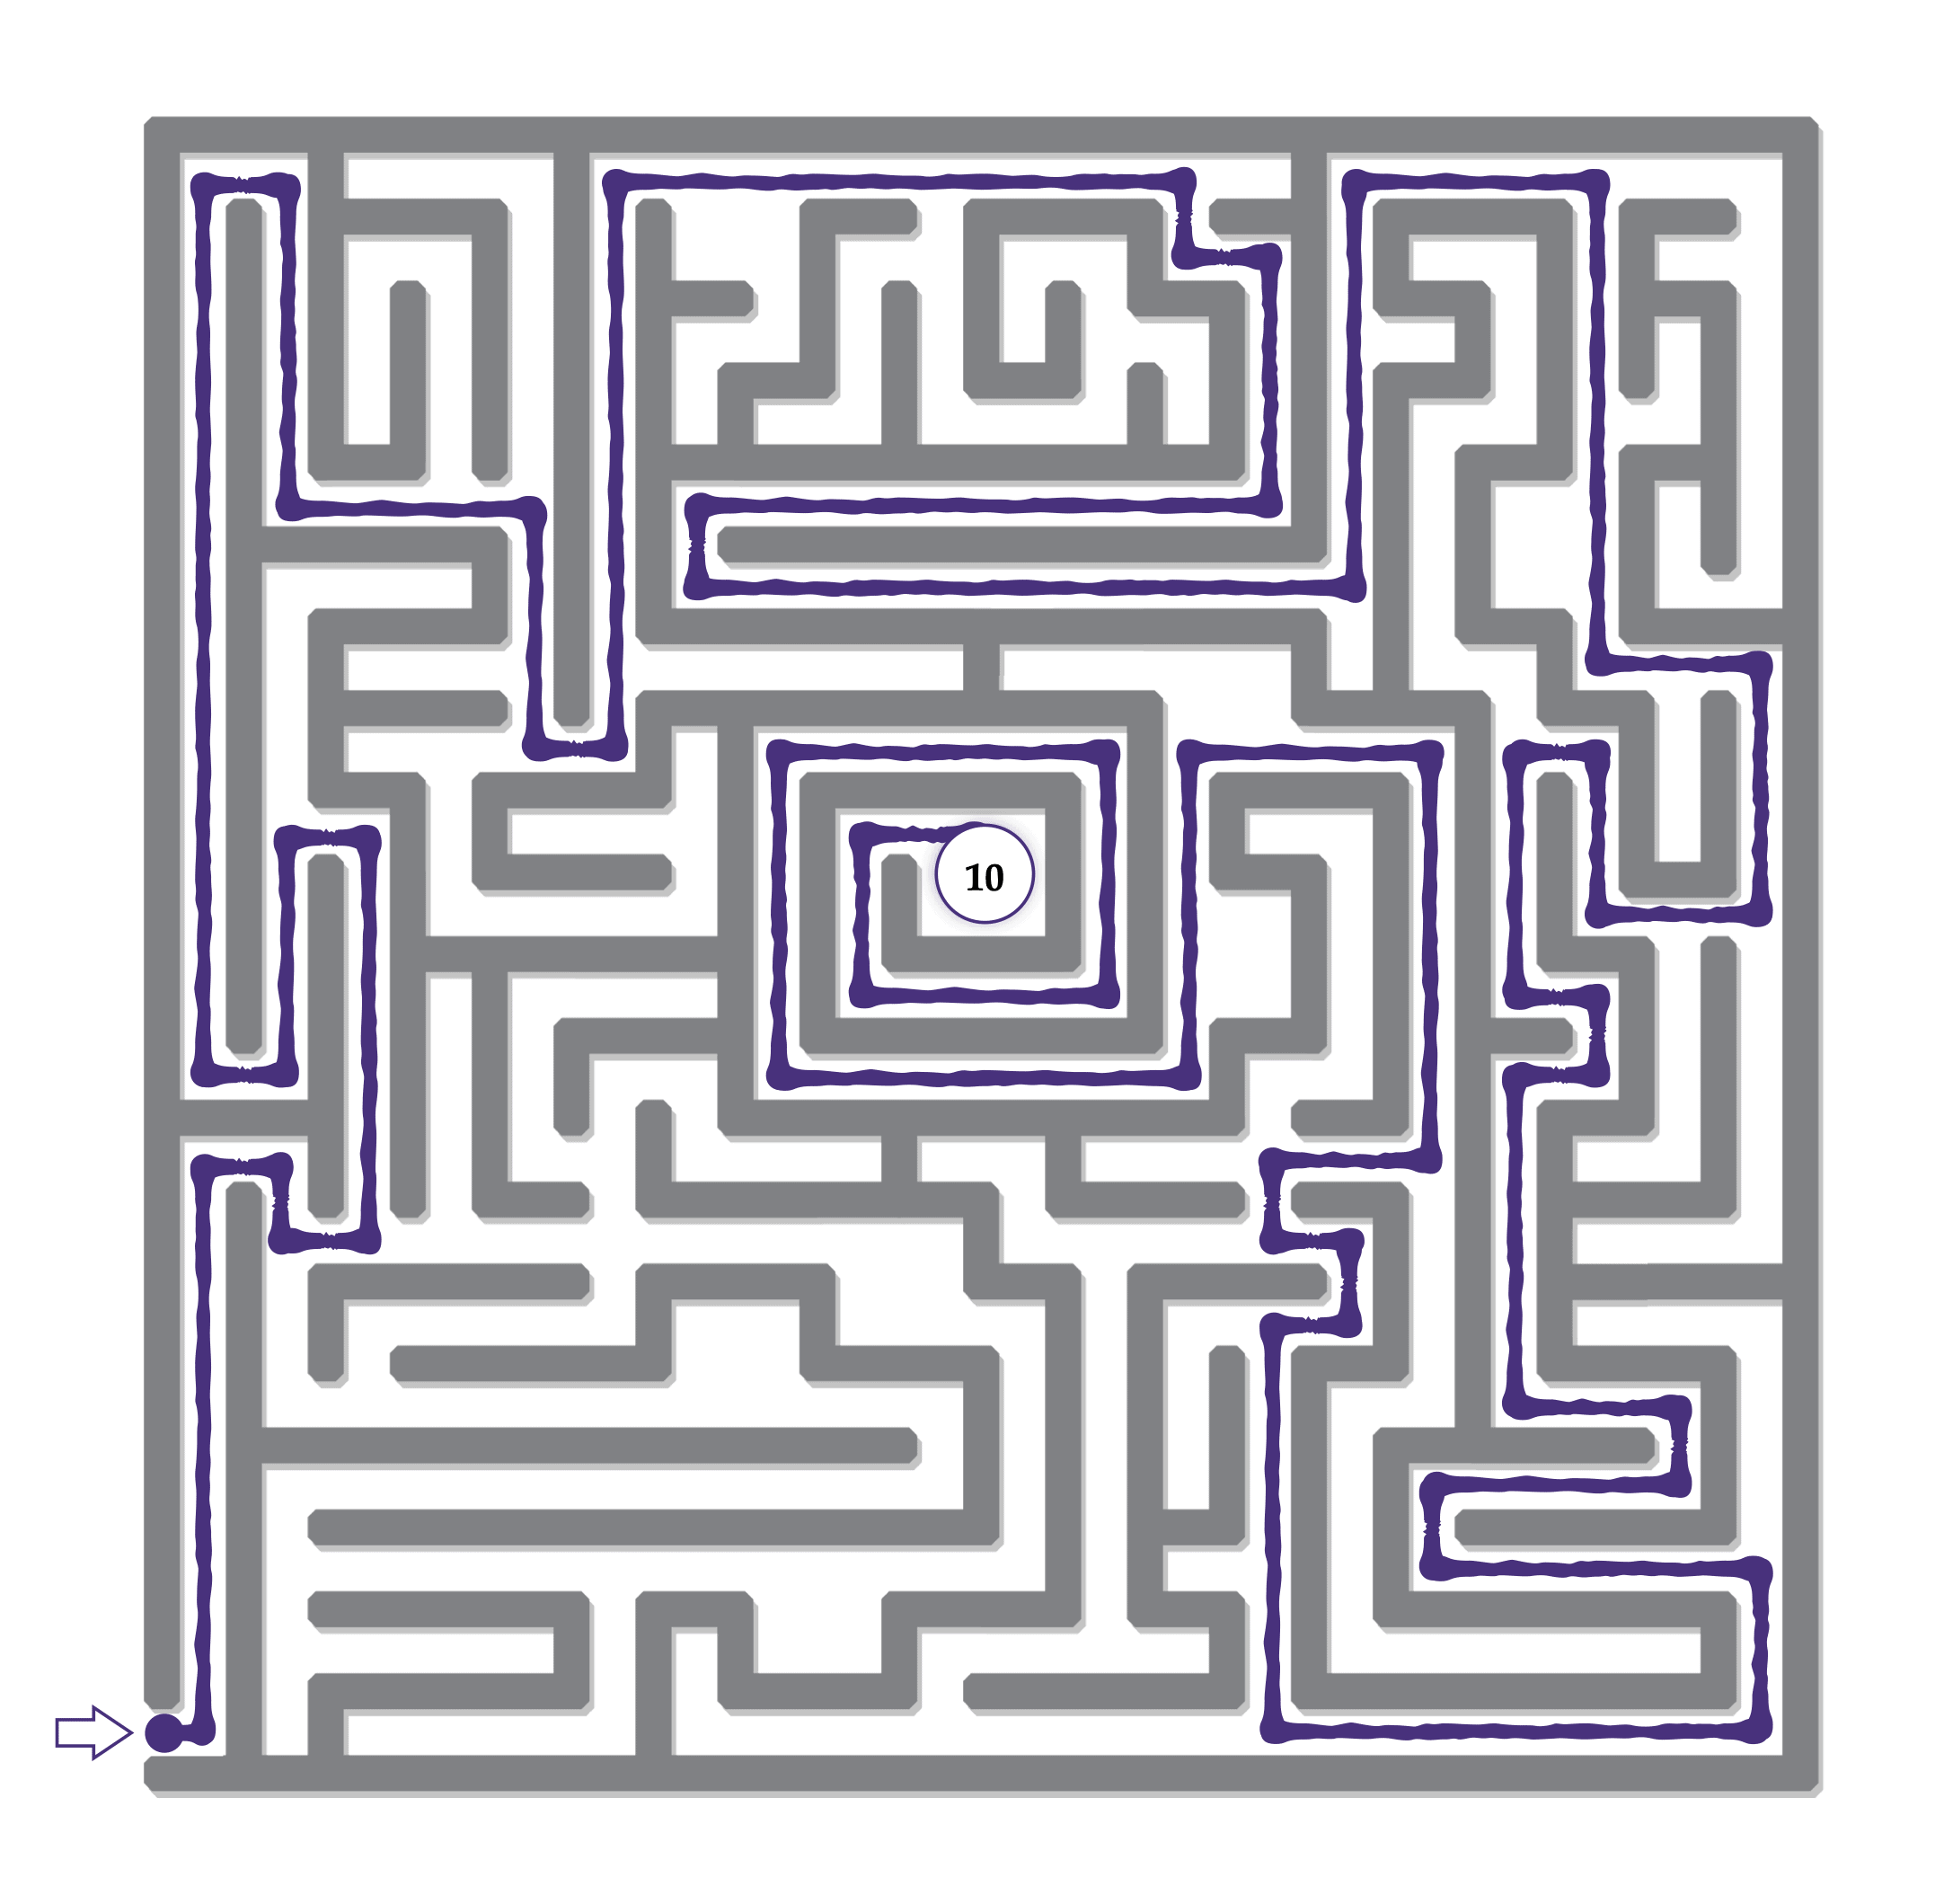 5345220 Maze step 10